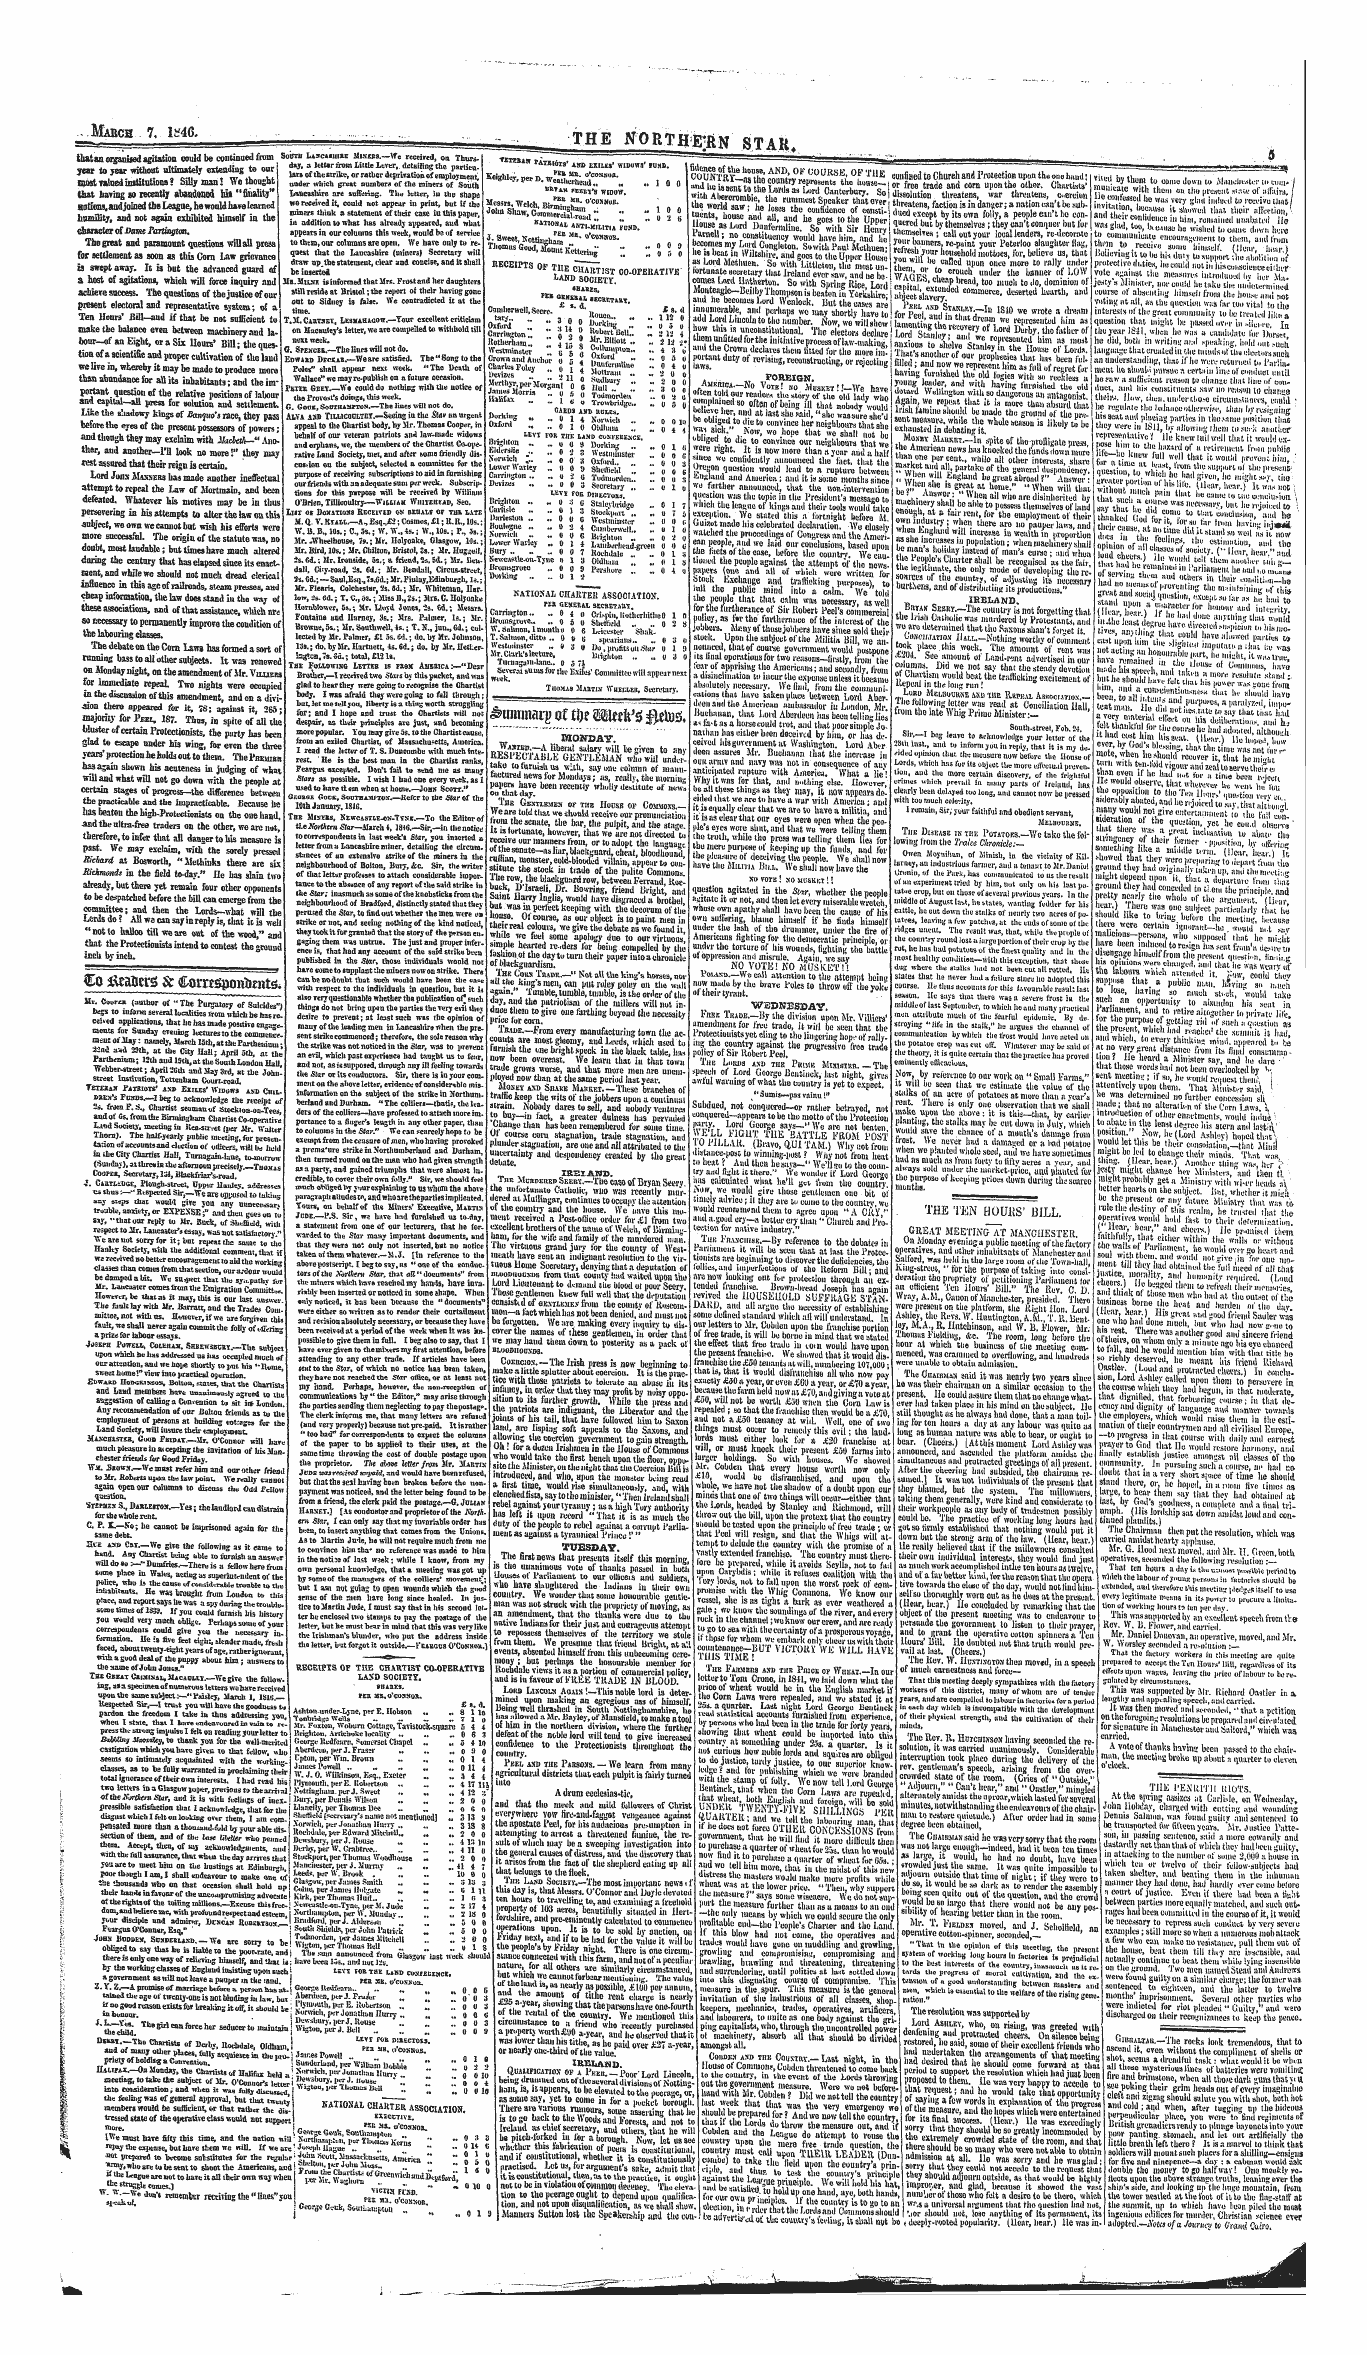 Northern Star (1837-1852): jS F Y, 1st edition - Co I\Eatierg ^ Mgjpoigigit^